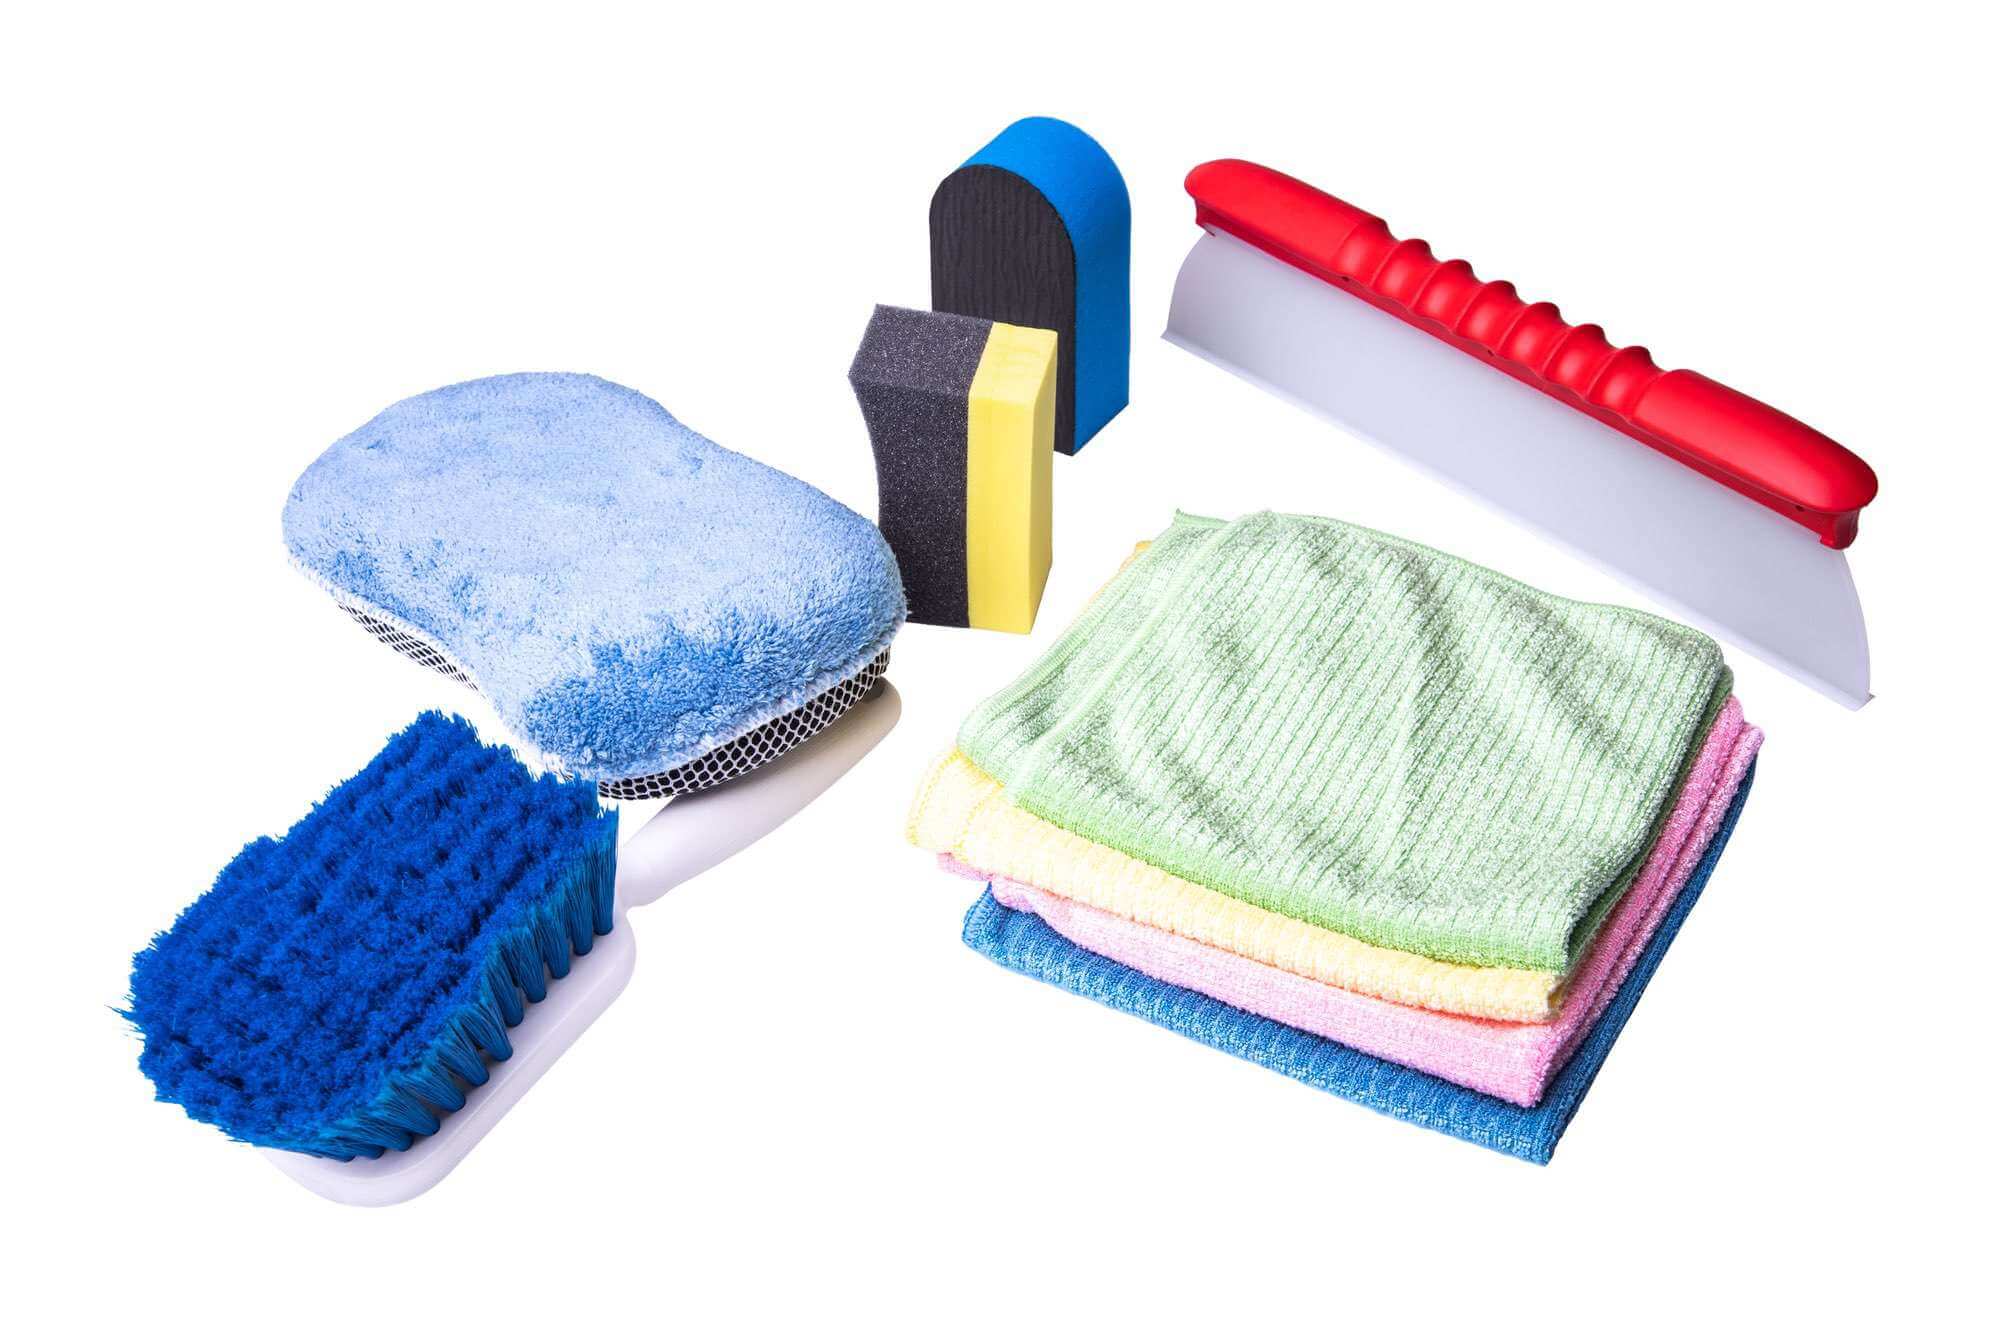 Detergent accessories and detailing